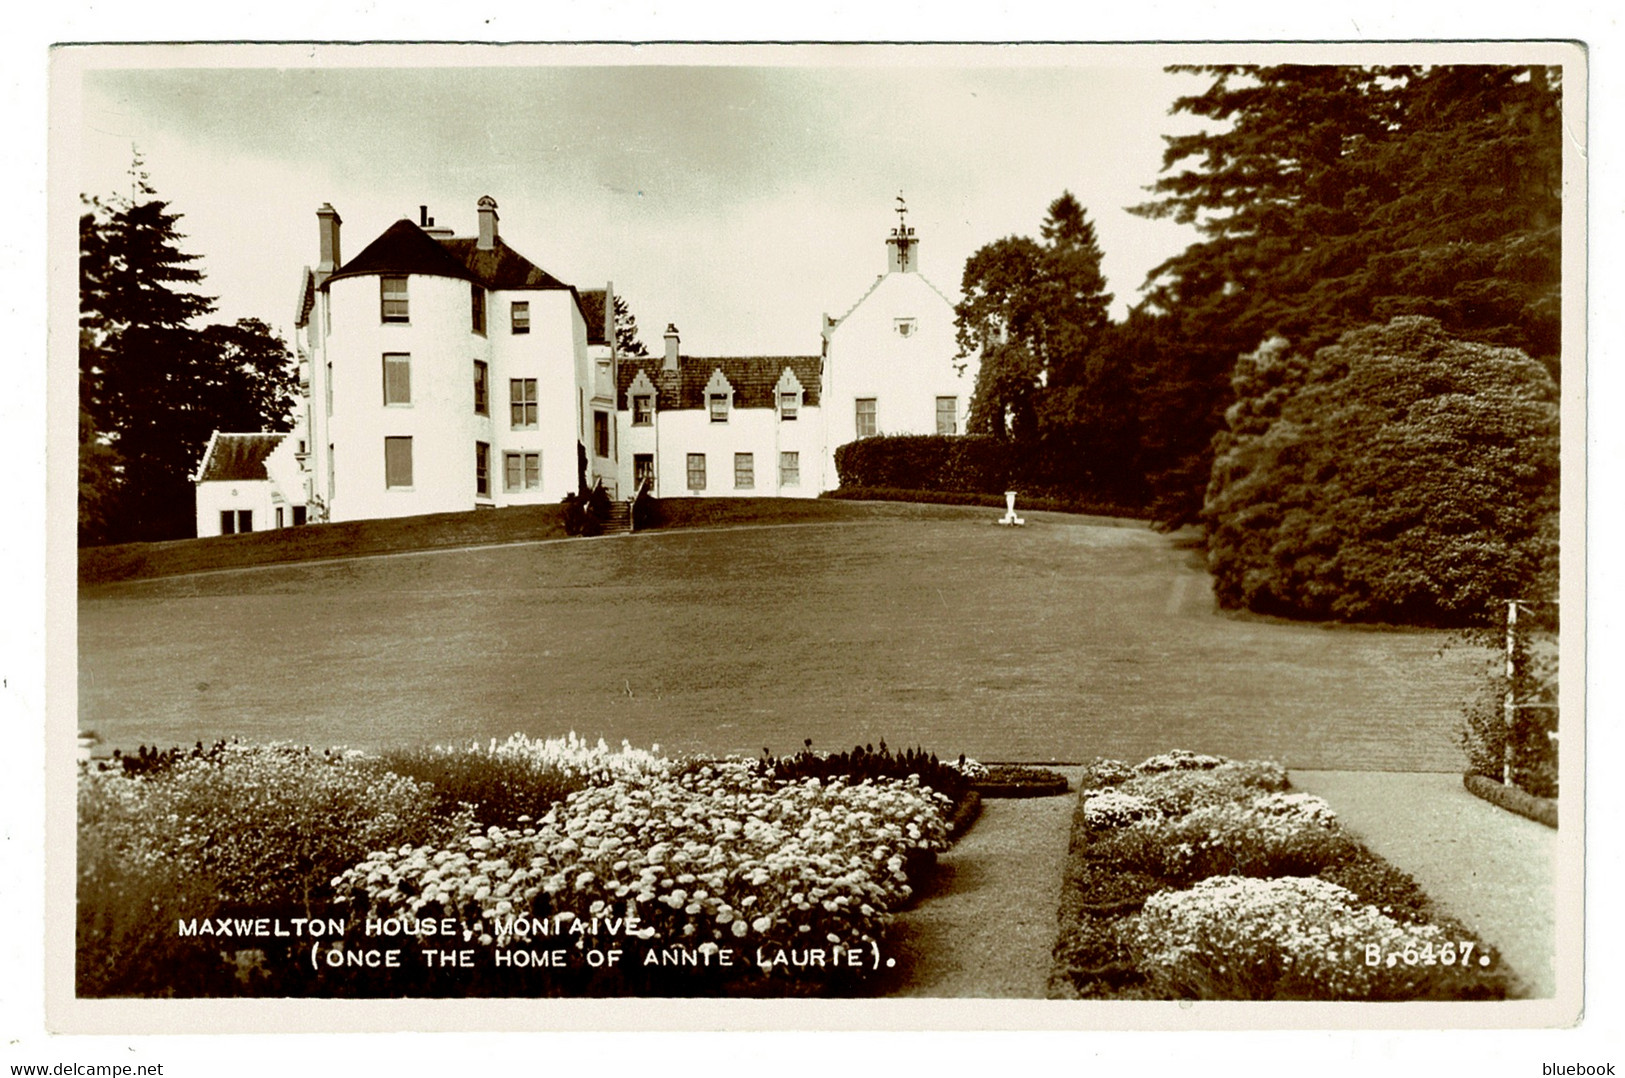 Ref 1512 - Real Photo Postcard - Maxwelton House Moniave - Dumfries & Galloway Scotland - Dumfriesshire